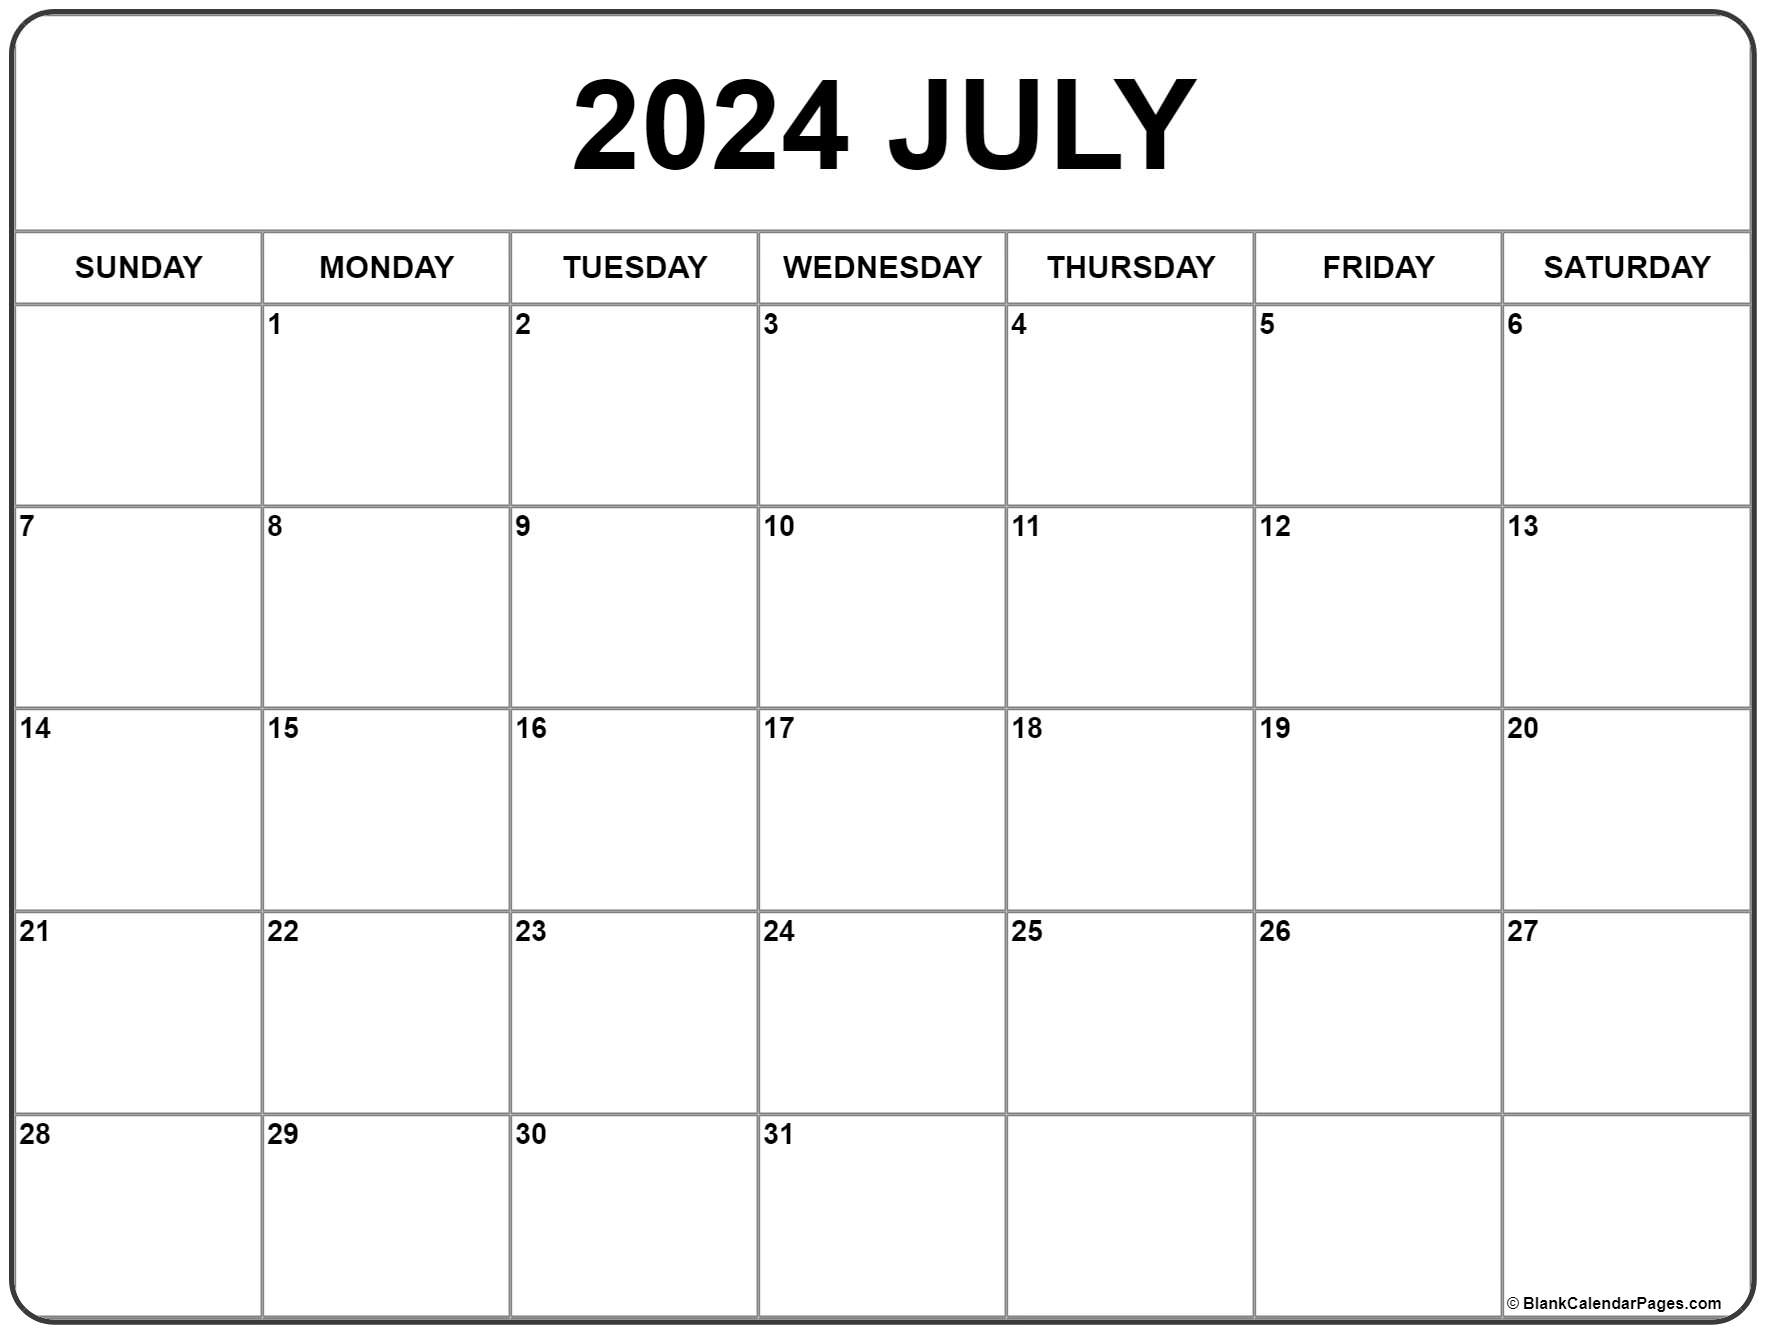 July 2024 Calendar | Free Printable Calendar within Free Printable July 2024 Monthly Calendar